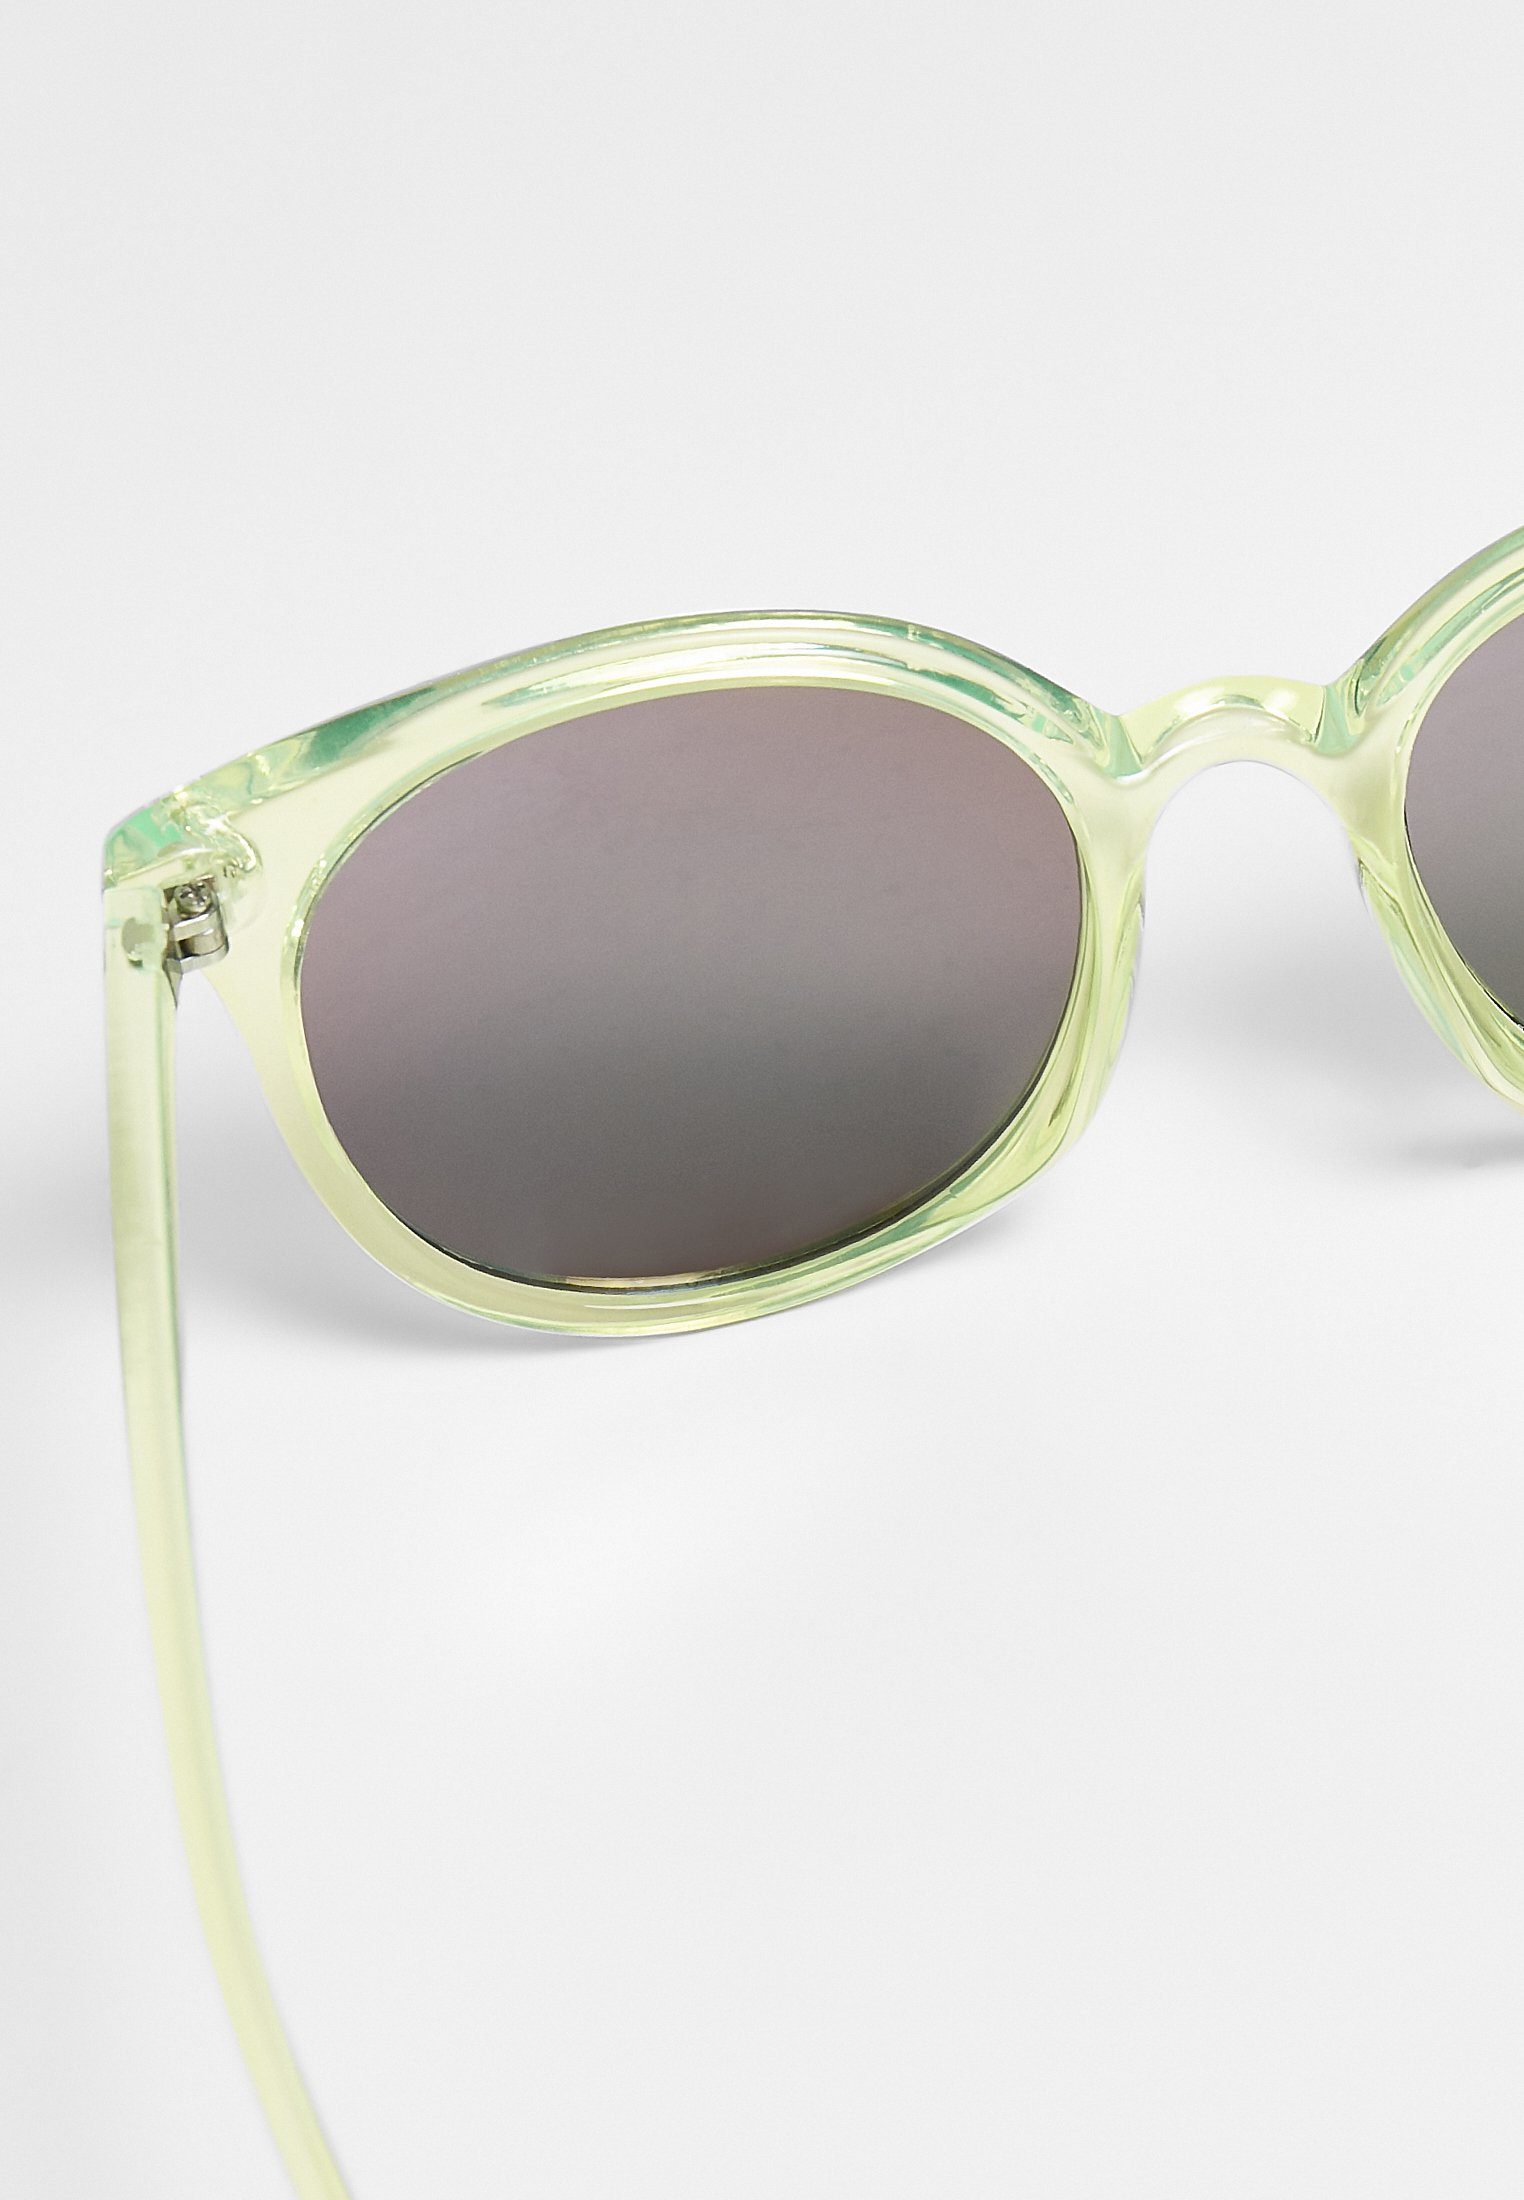 108 Accessoires URBAN neonyellow/black Sunglasses UC CLASSICS Sonnenbrille